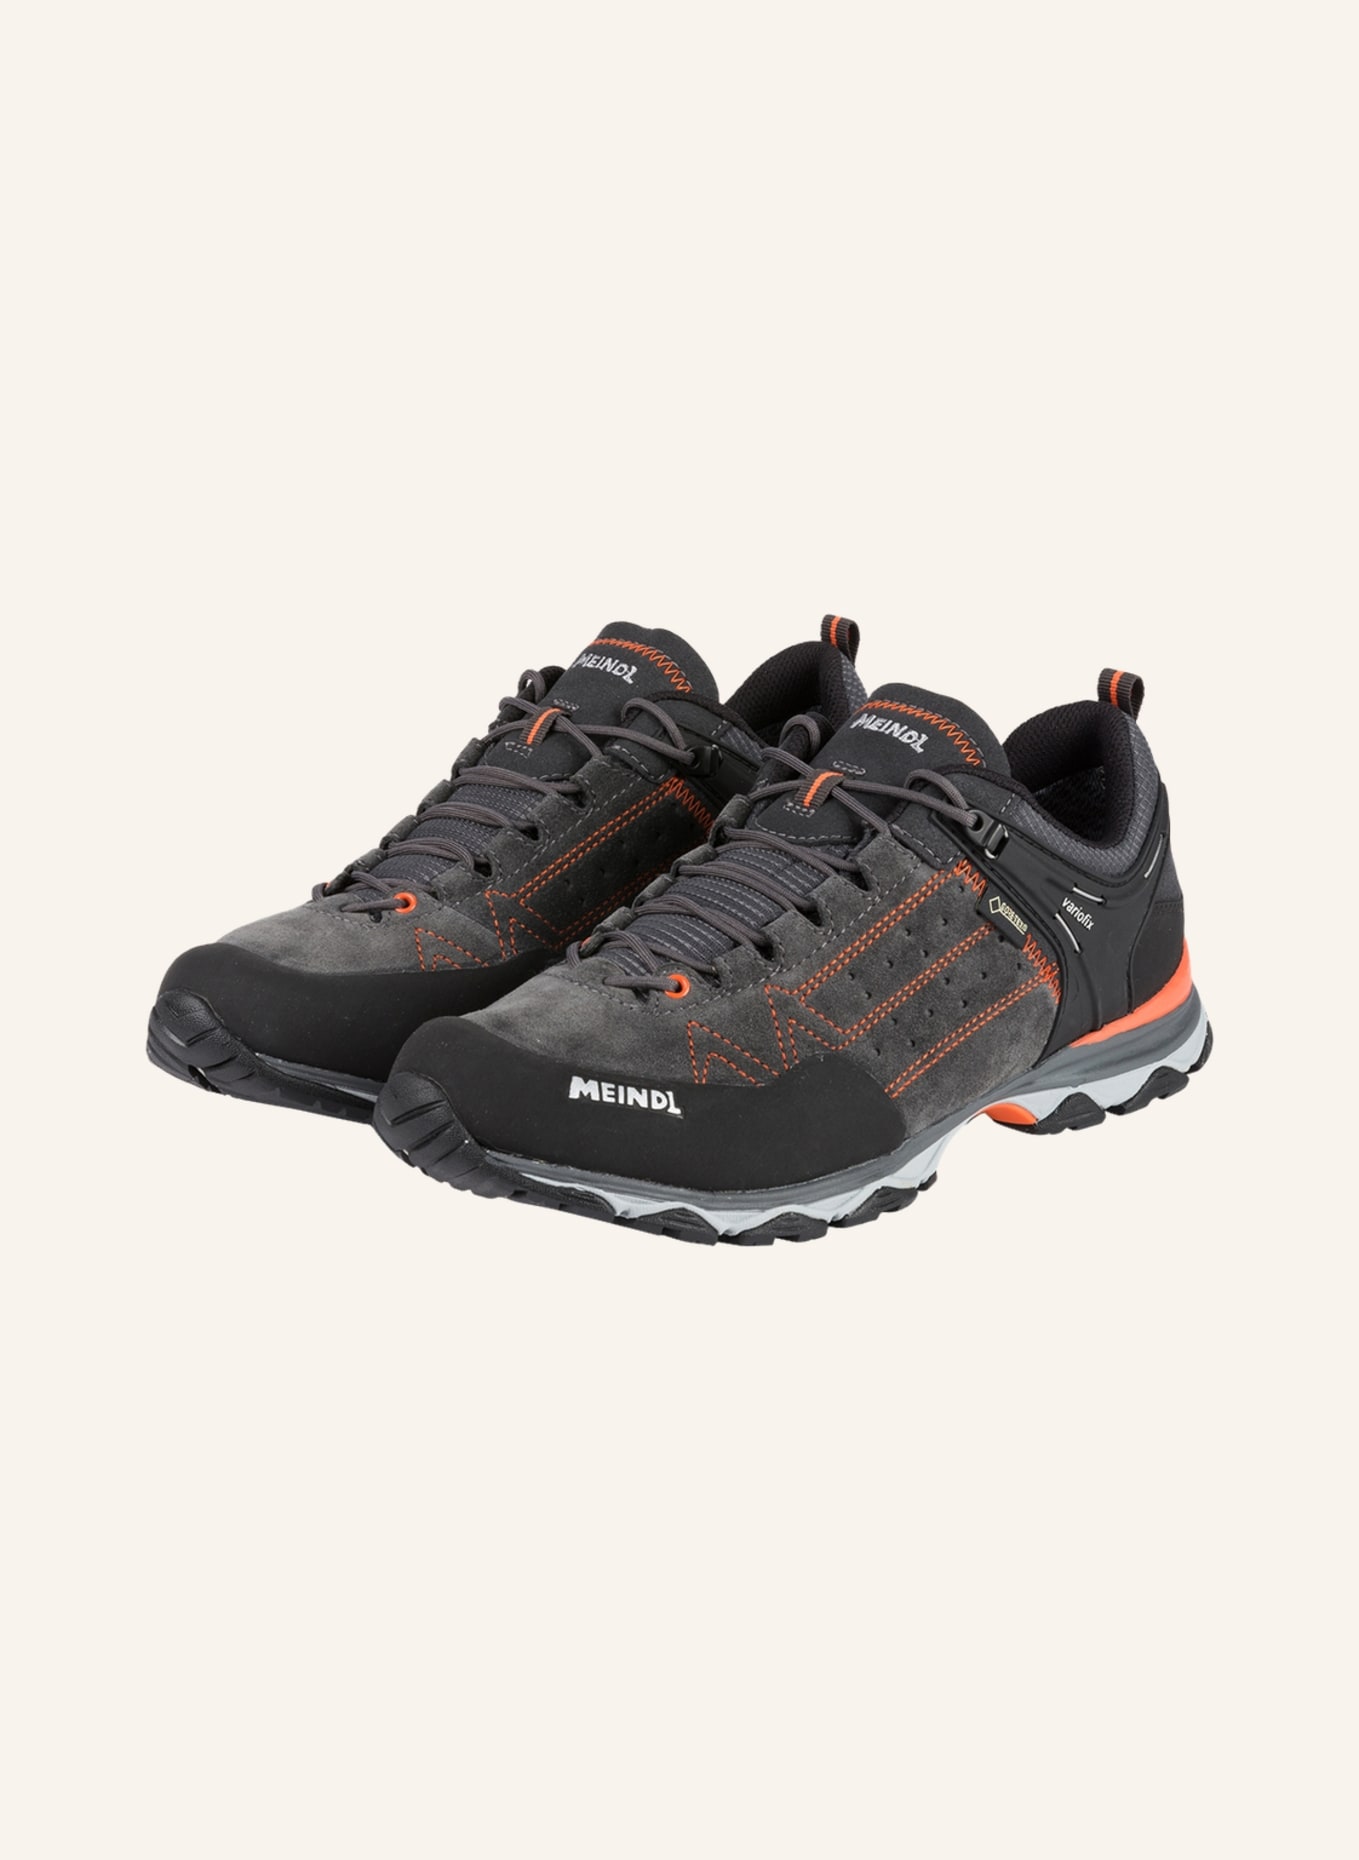 revolutie zweer Leuk vinden MEINDL Outdoor-Schuhe ONTARIO GTX in grau/ schwarz/ orange